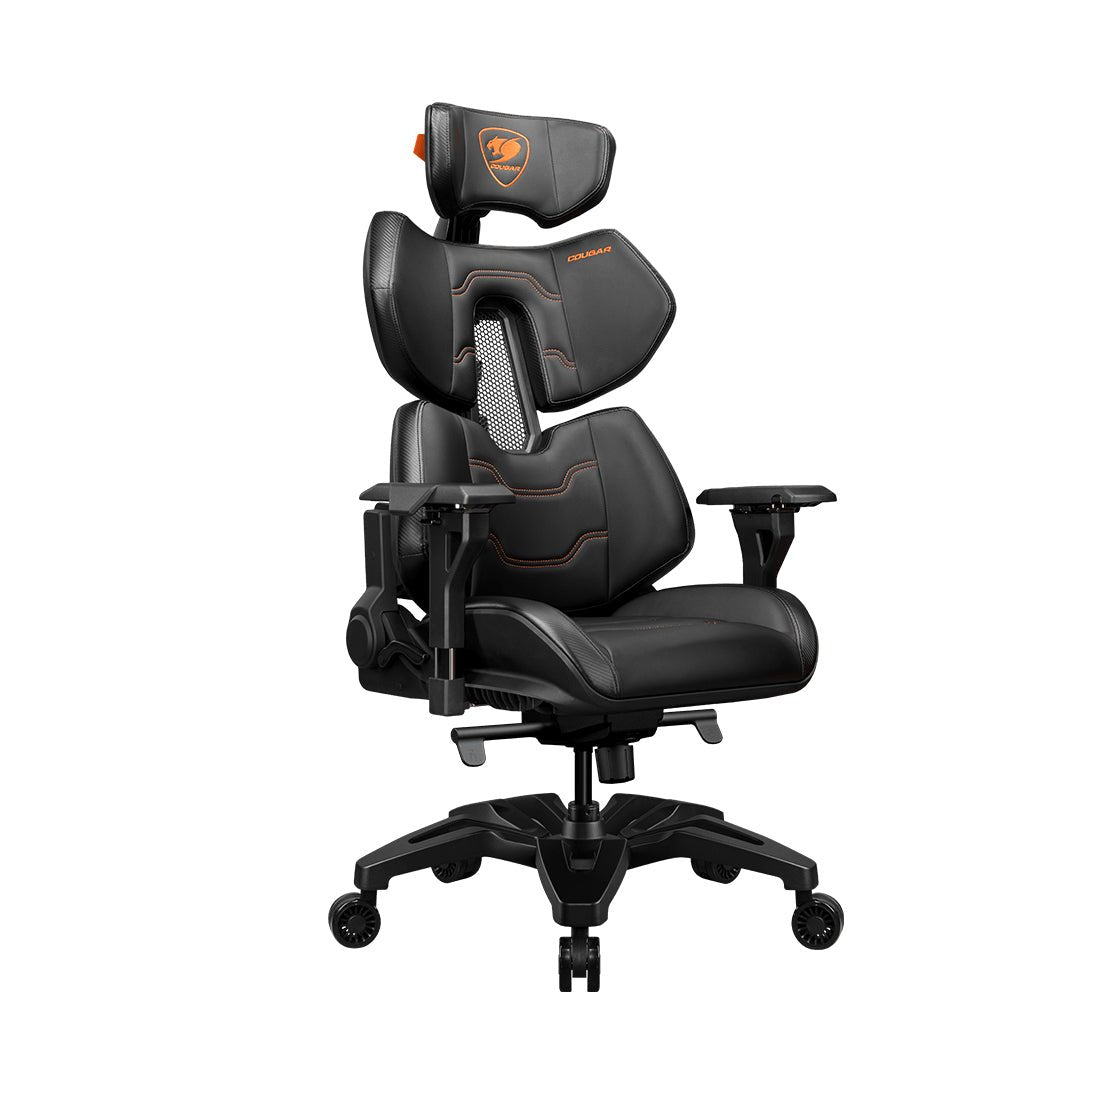 Cougar Terminator Ergonomic Gaming Chair - Black - Store 974 | ستور ٩٧٤